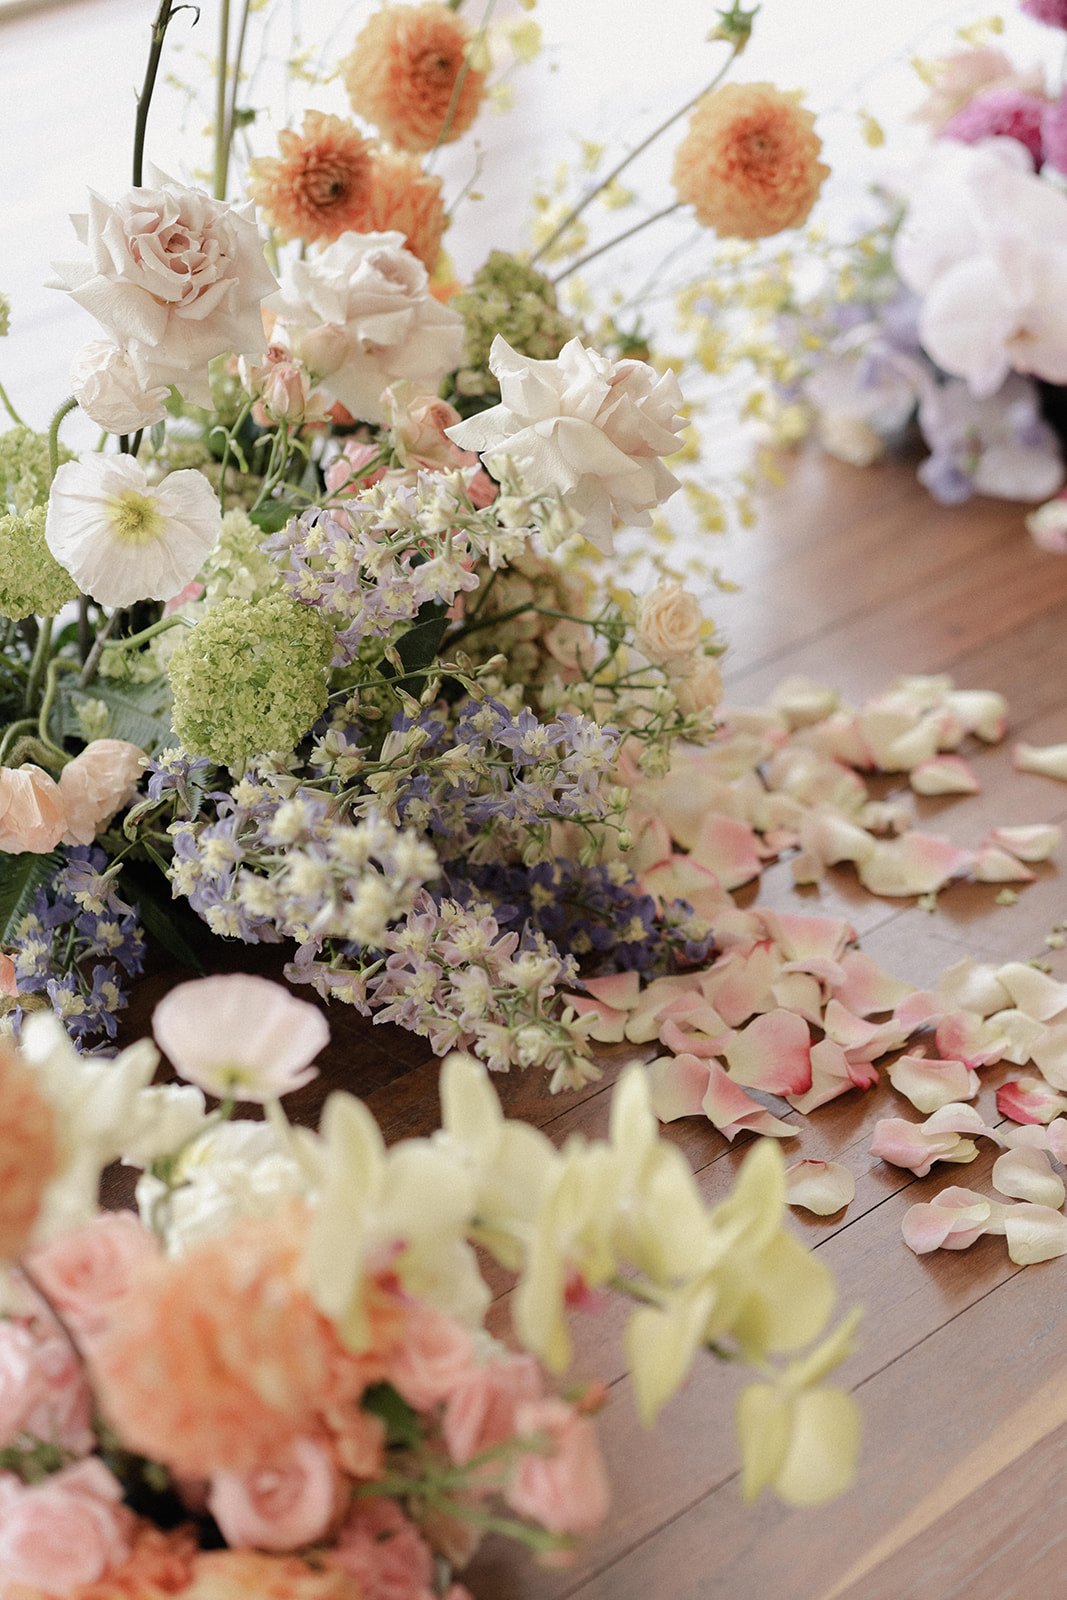 Summergrove Estate Wedding photography chapel ceremony with bright flower arrangement